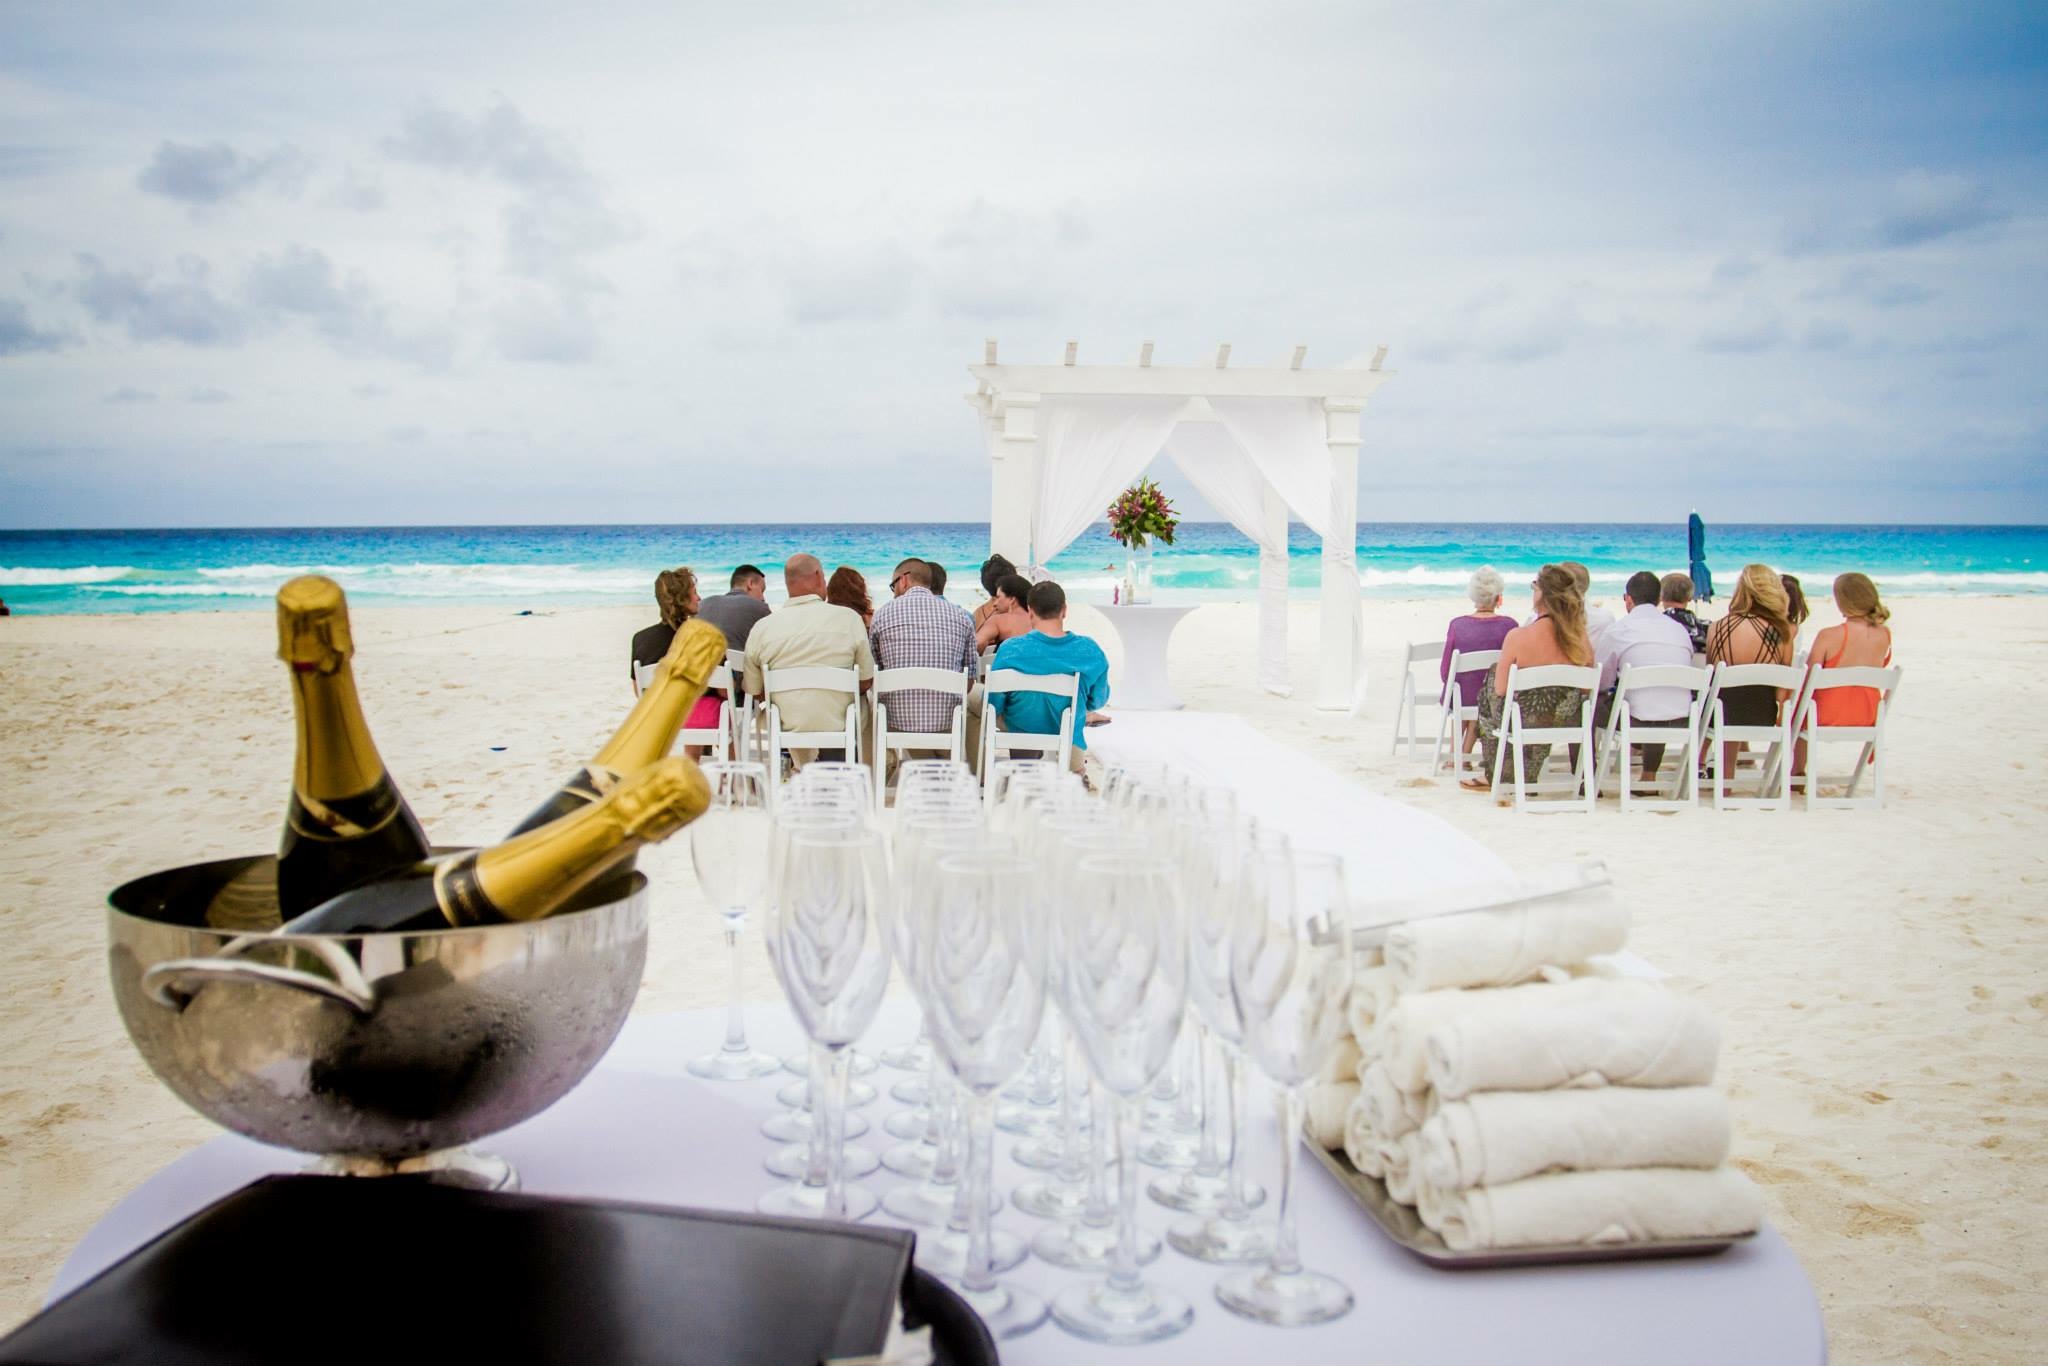 krysten-reed-cancun-beach-wedding-9.JPG